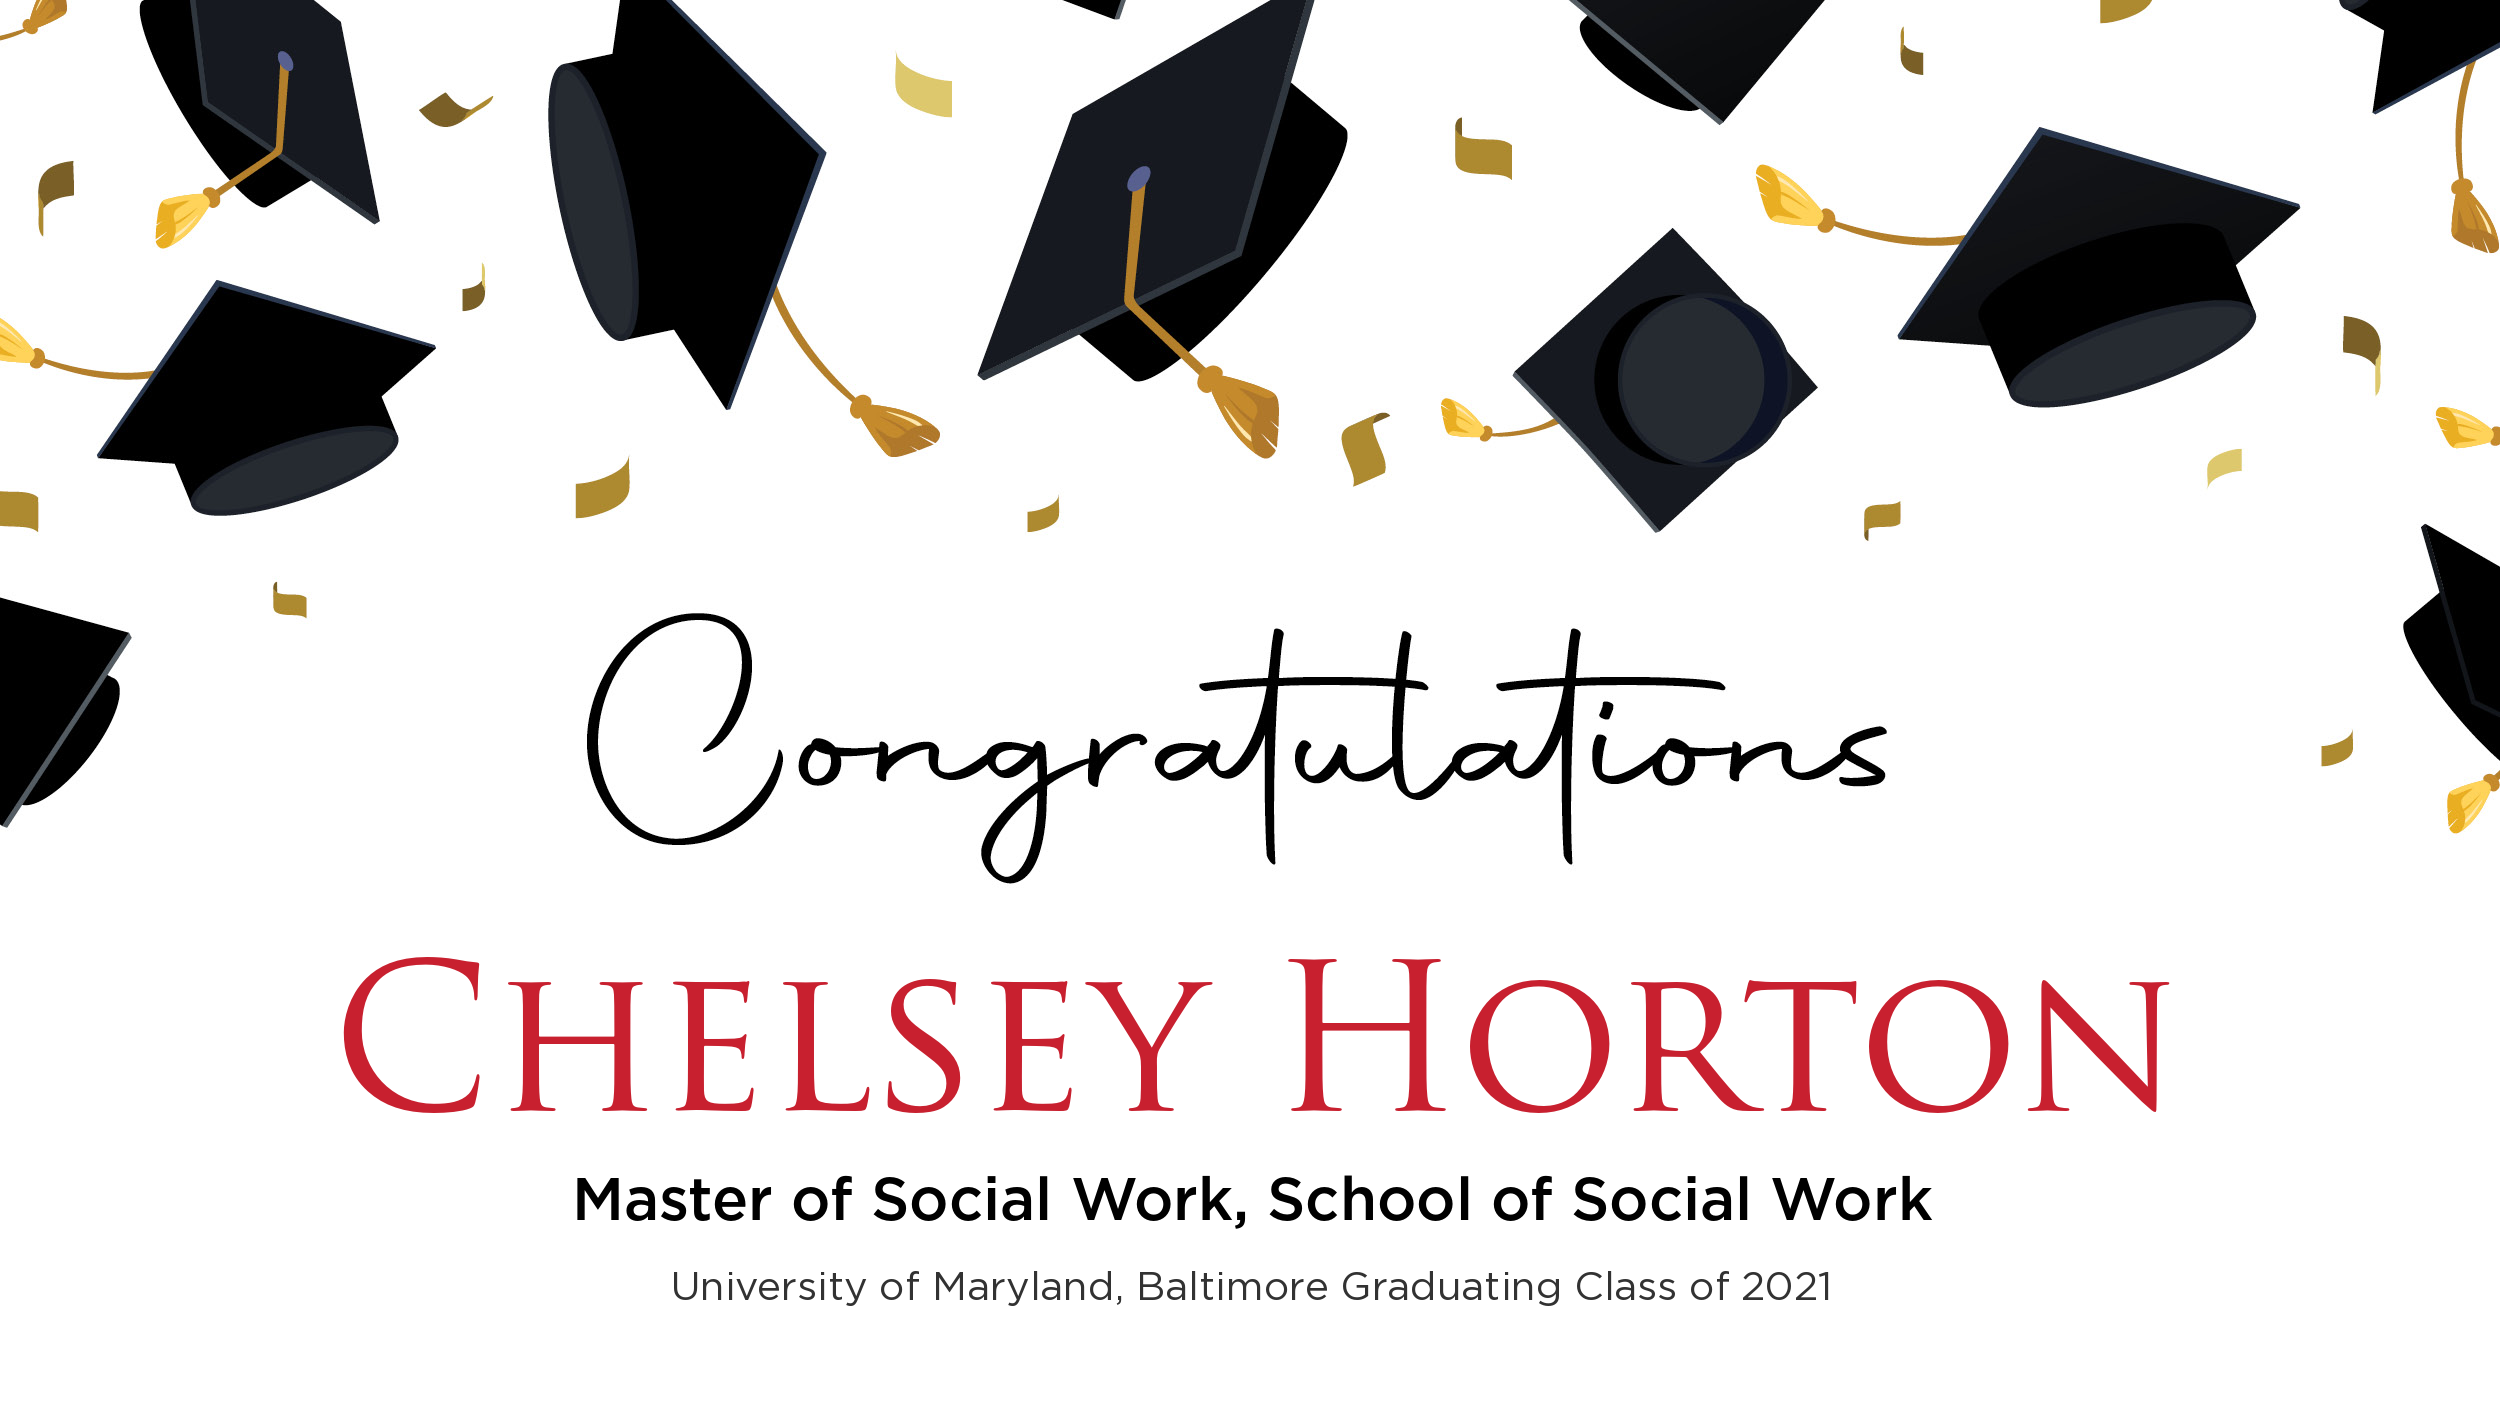 Congratulations Chelsey Horton, Master of Social Work